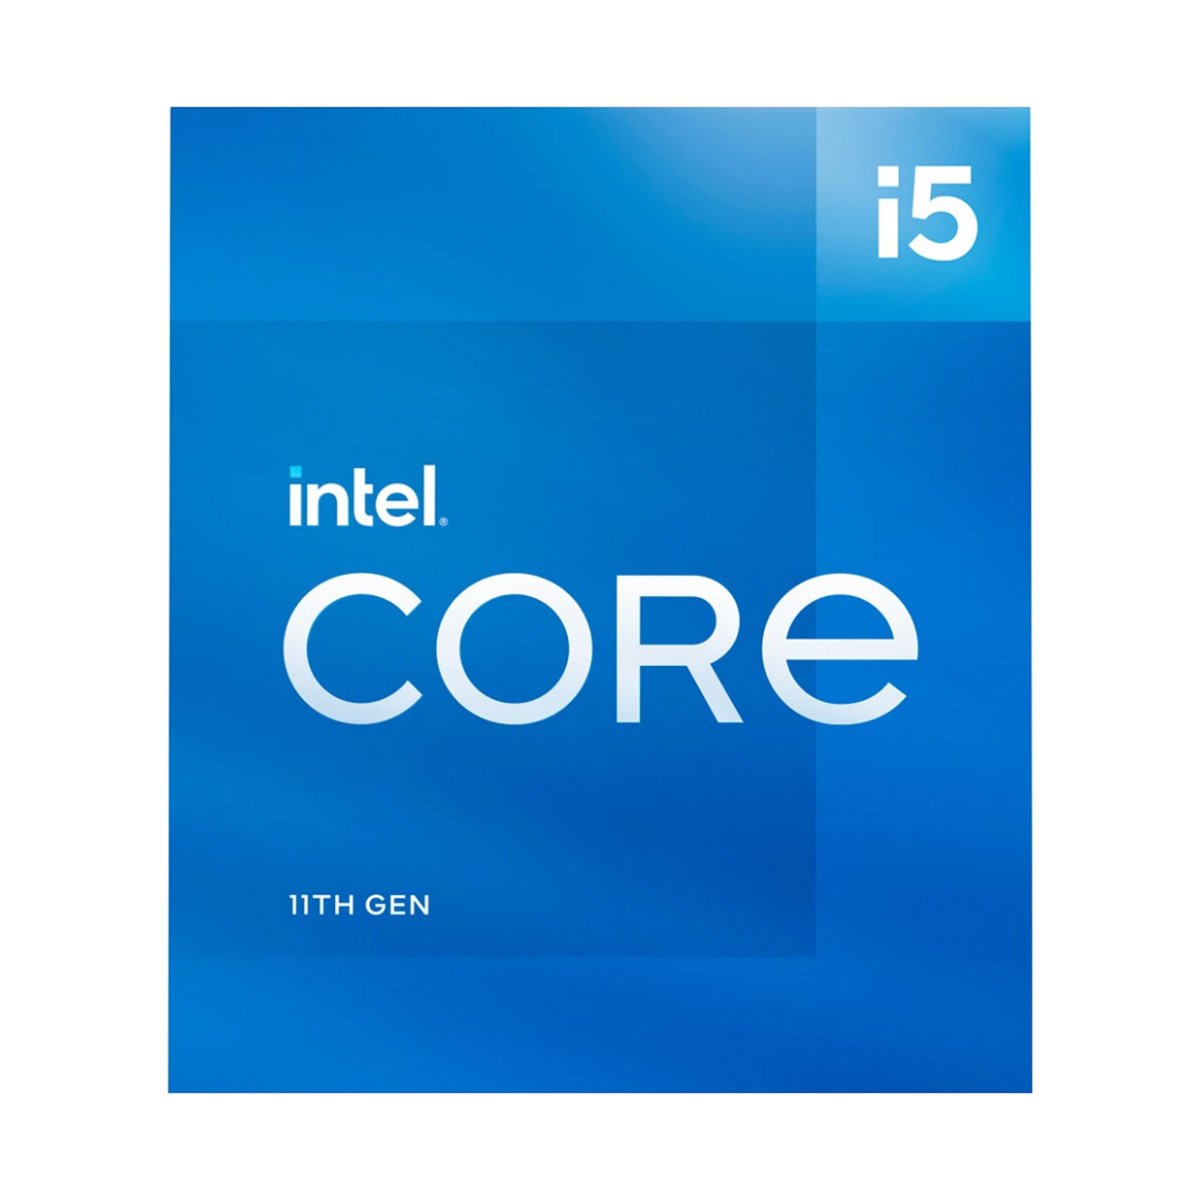 Intel Core 11th Gen i5-11500 LGA1200 डेस्कटॉप प्रोसेसर 6 कोर 4.6GHz तक 12MB कैशे